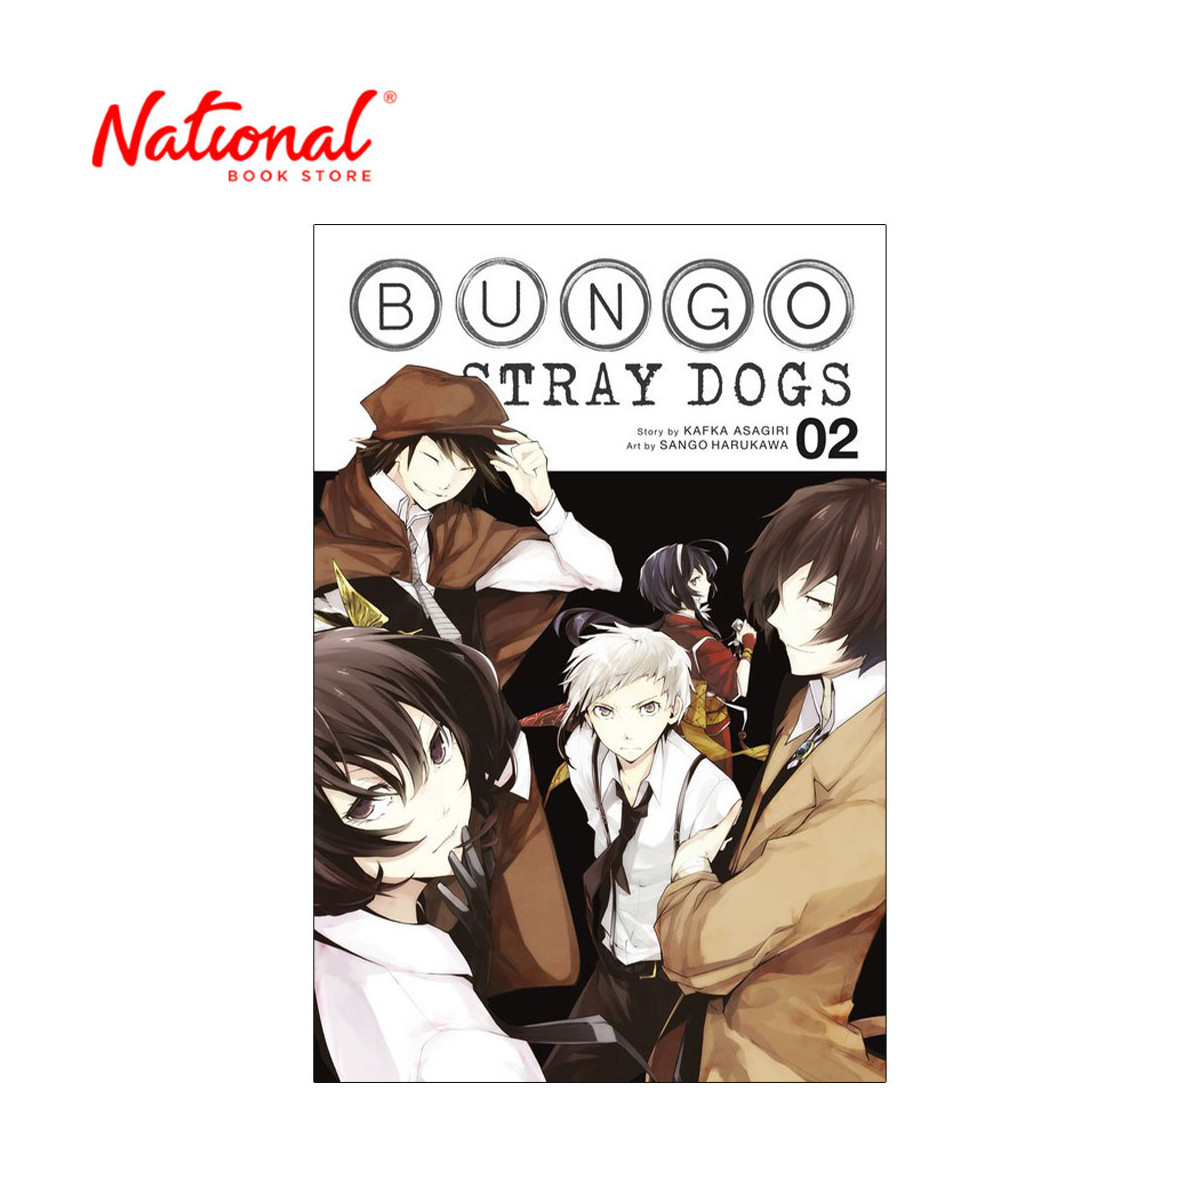 Bungo Stray Dogs (Volume 1 to 19) by Kafka Asagiri - Trade Paperback - Teens Fiction - Manga